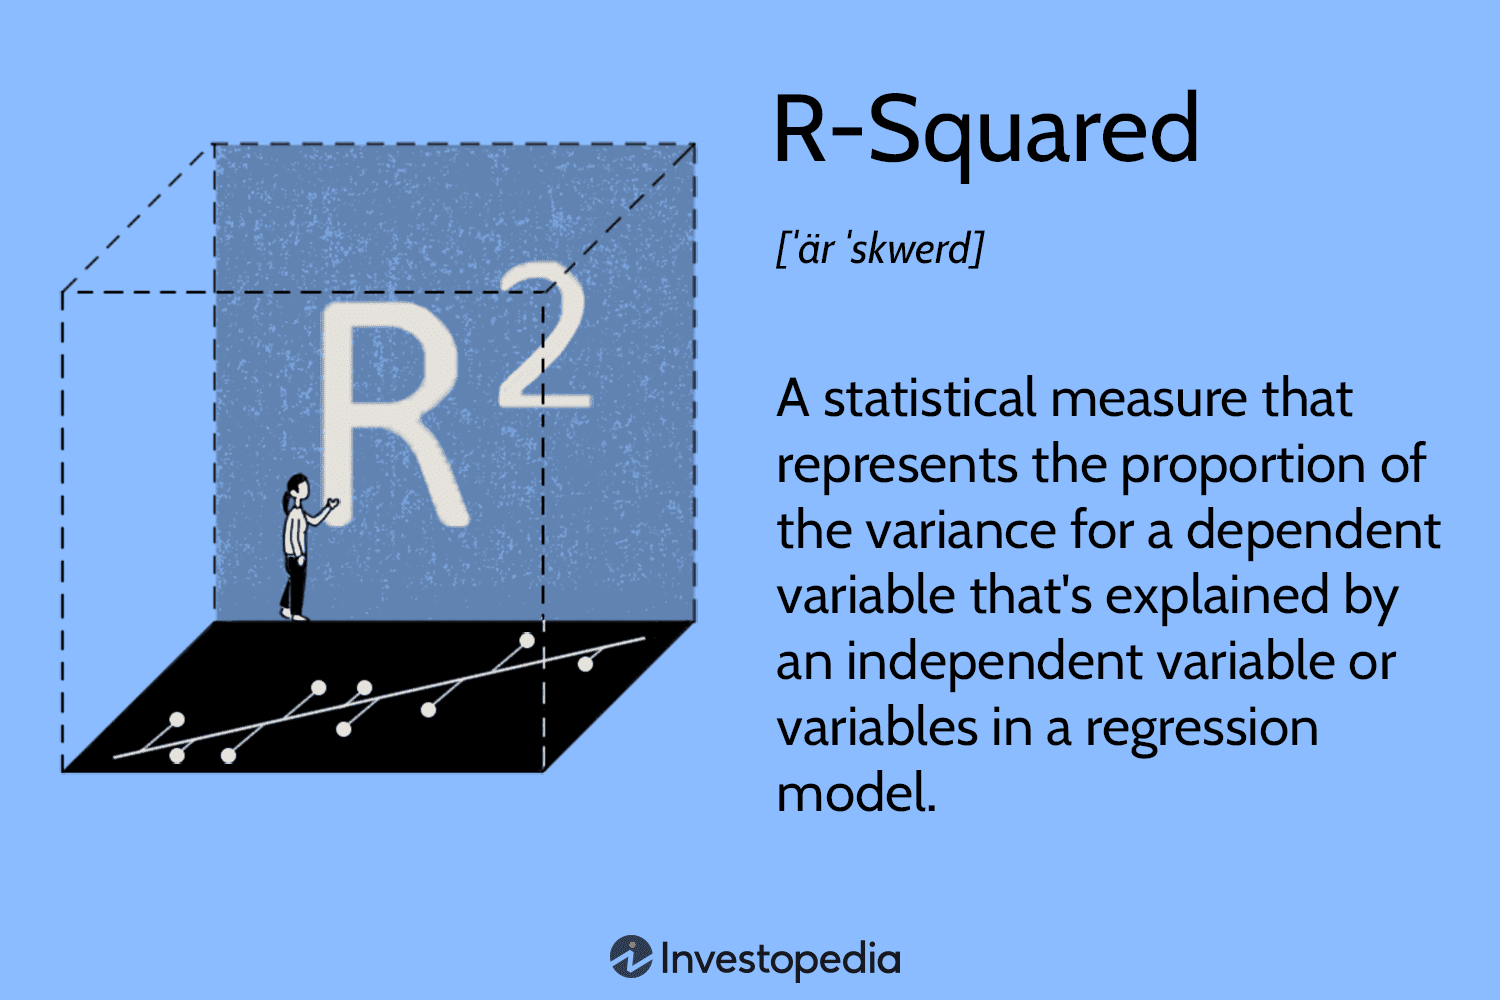 R-Squared